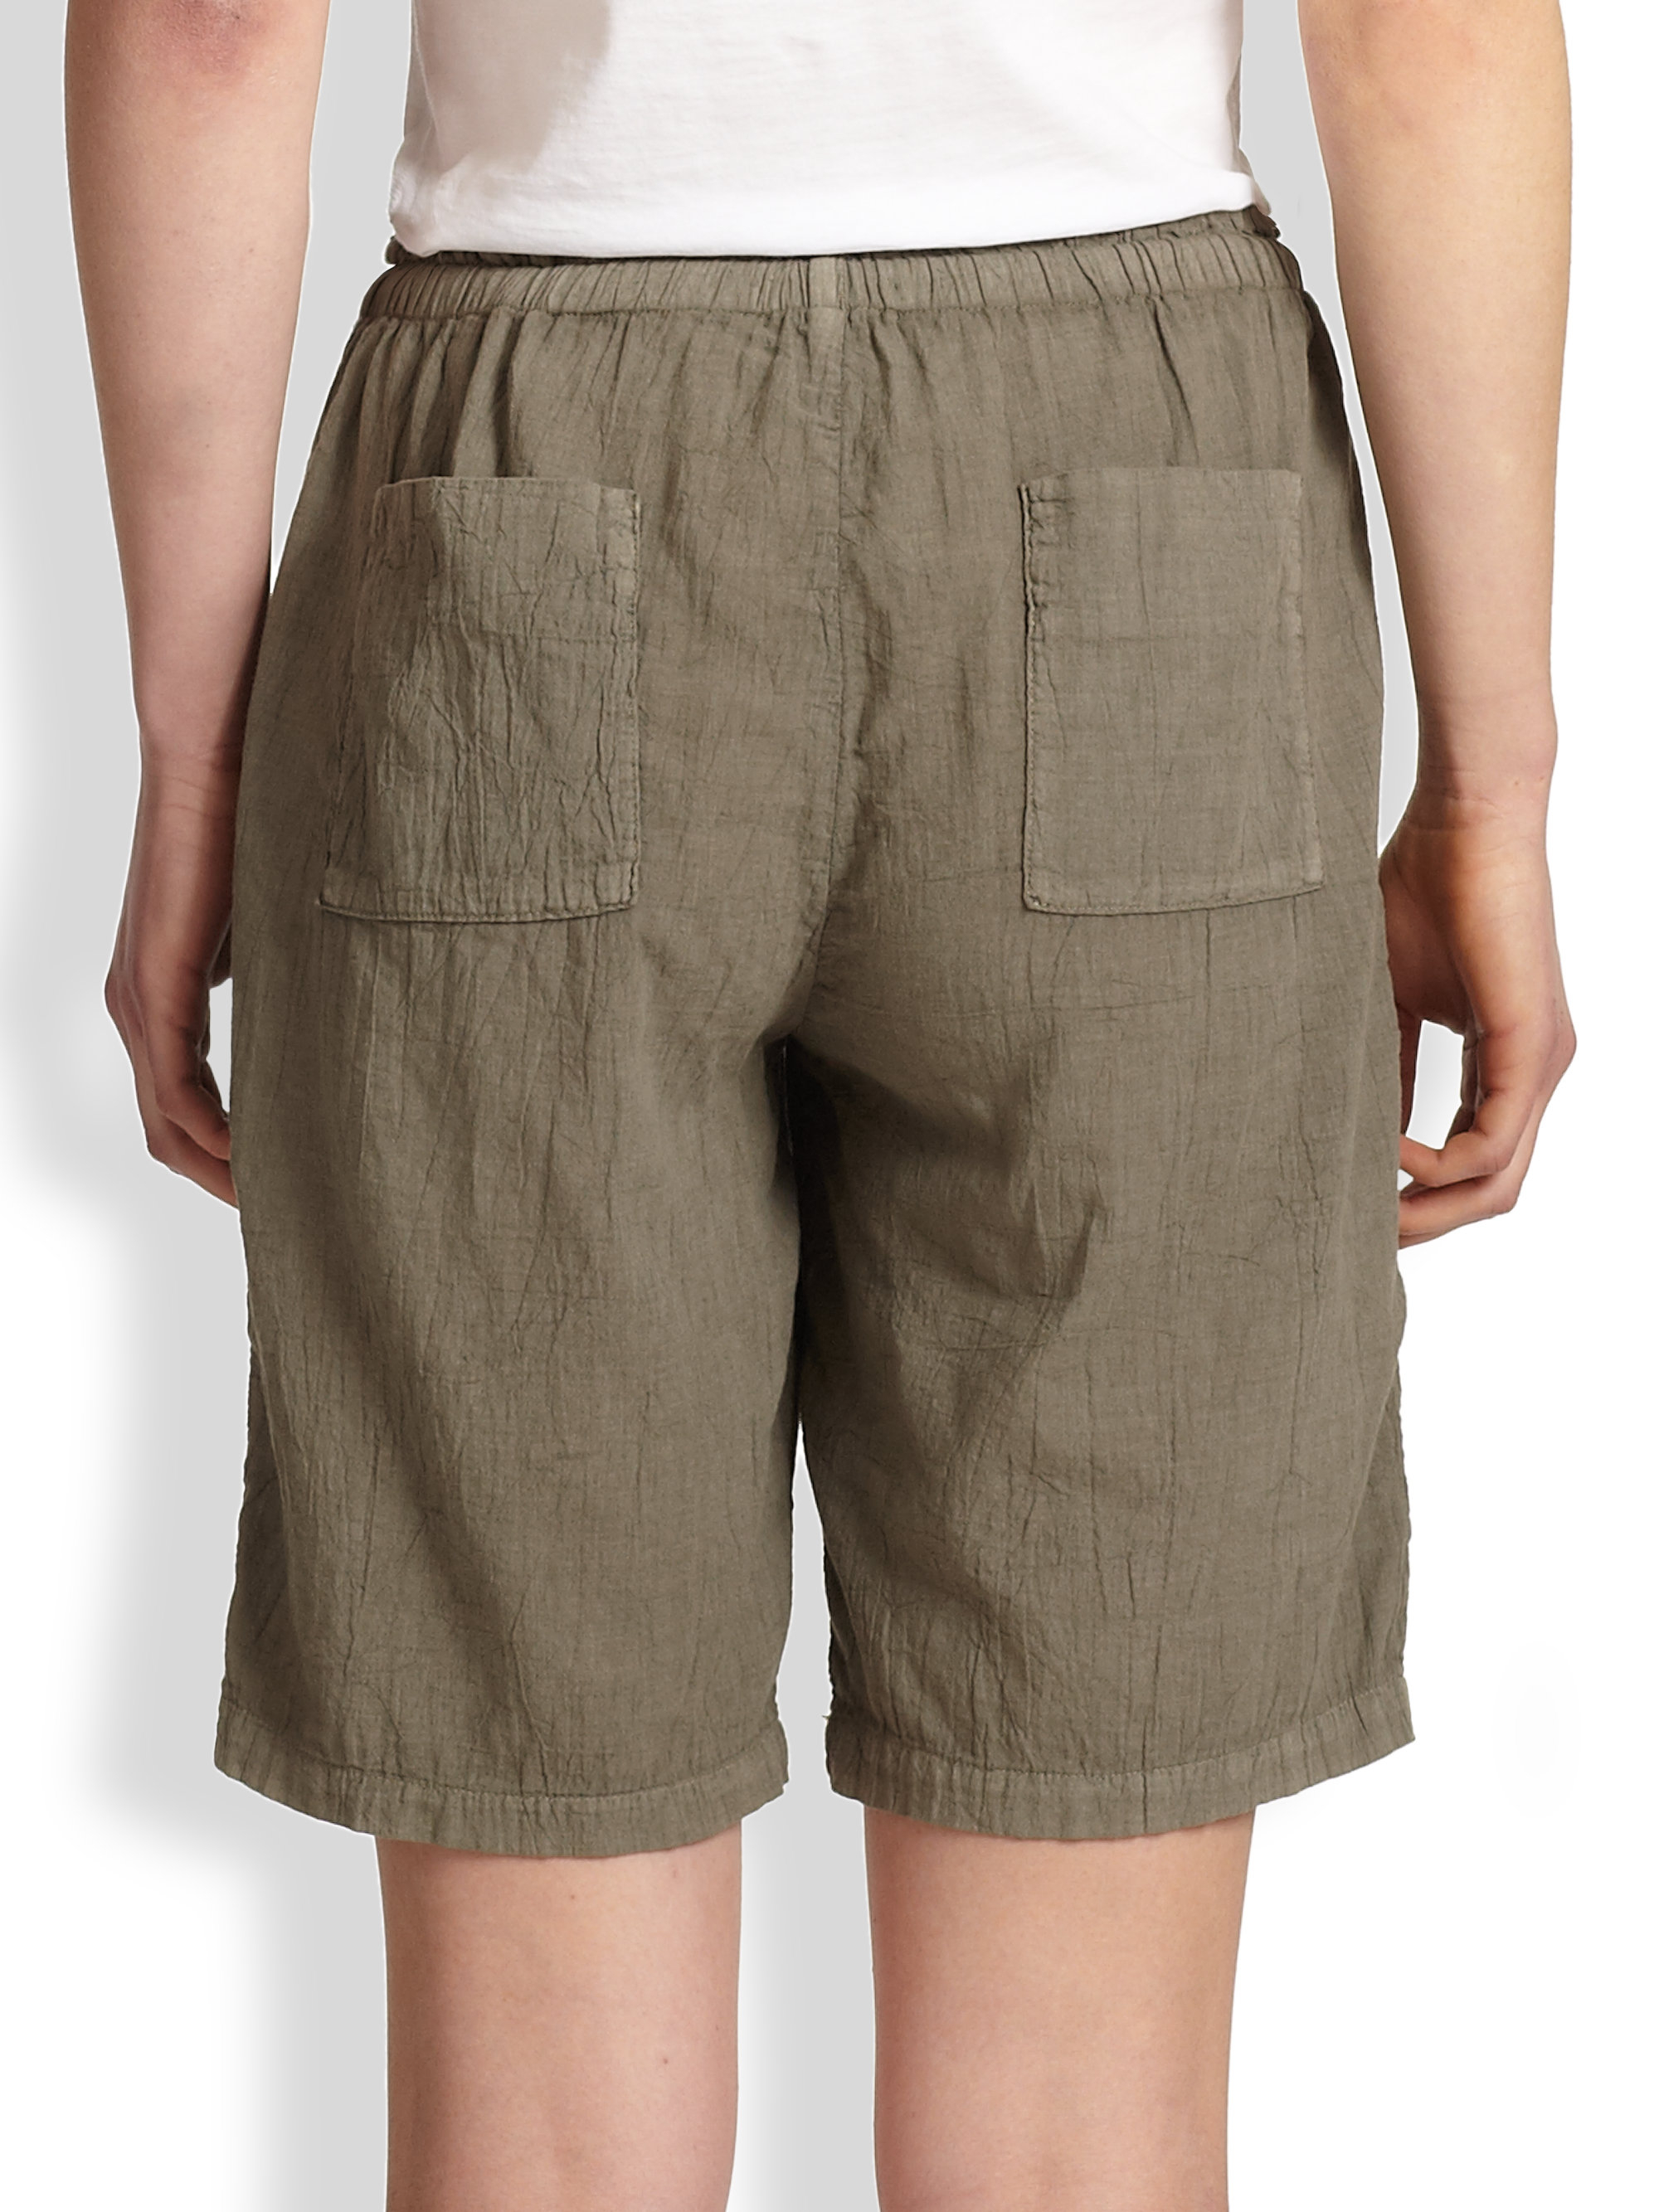 Lyst - James perse Drawstring Cotton Bermuda Shorts in Green